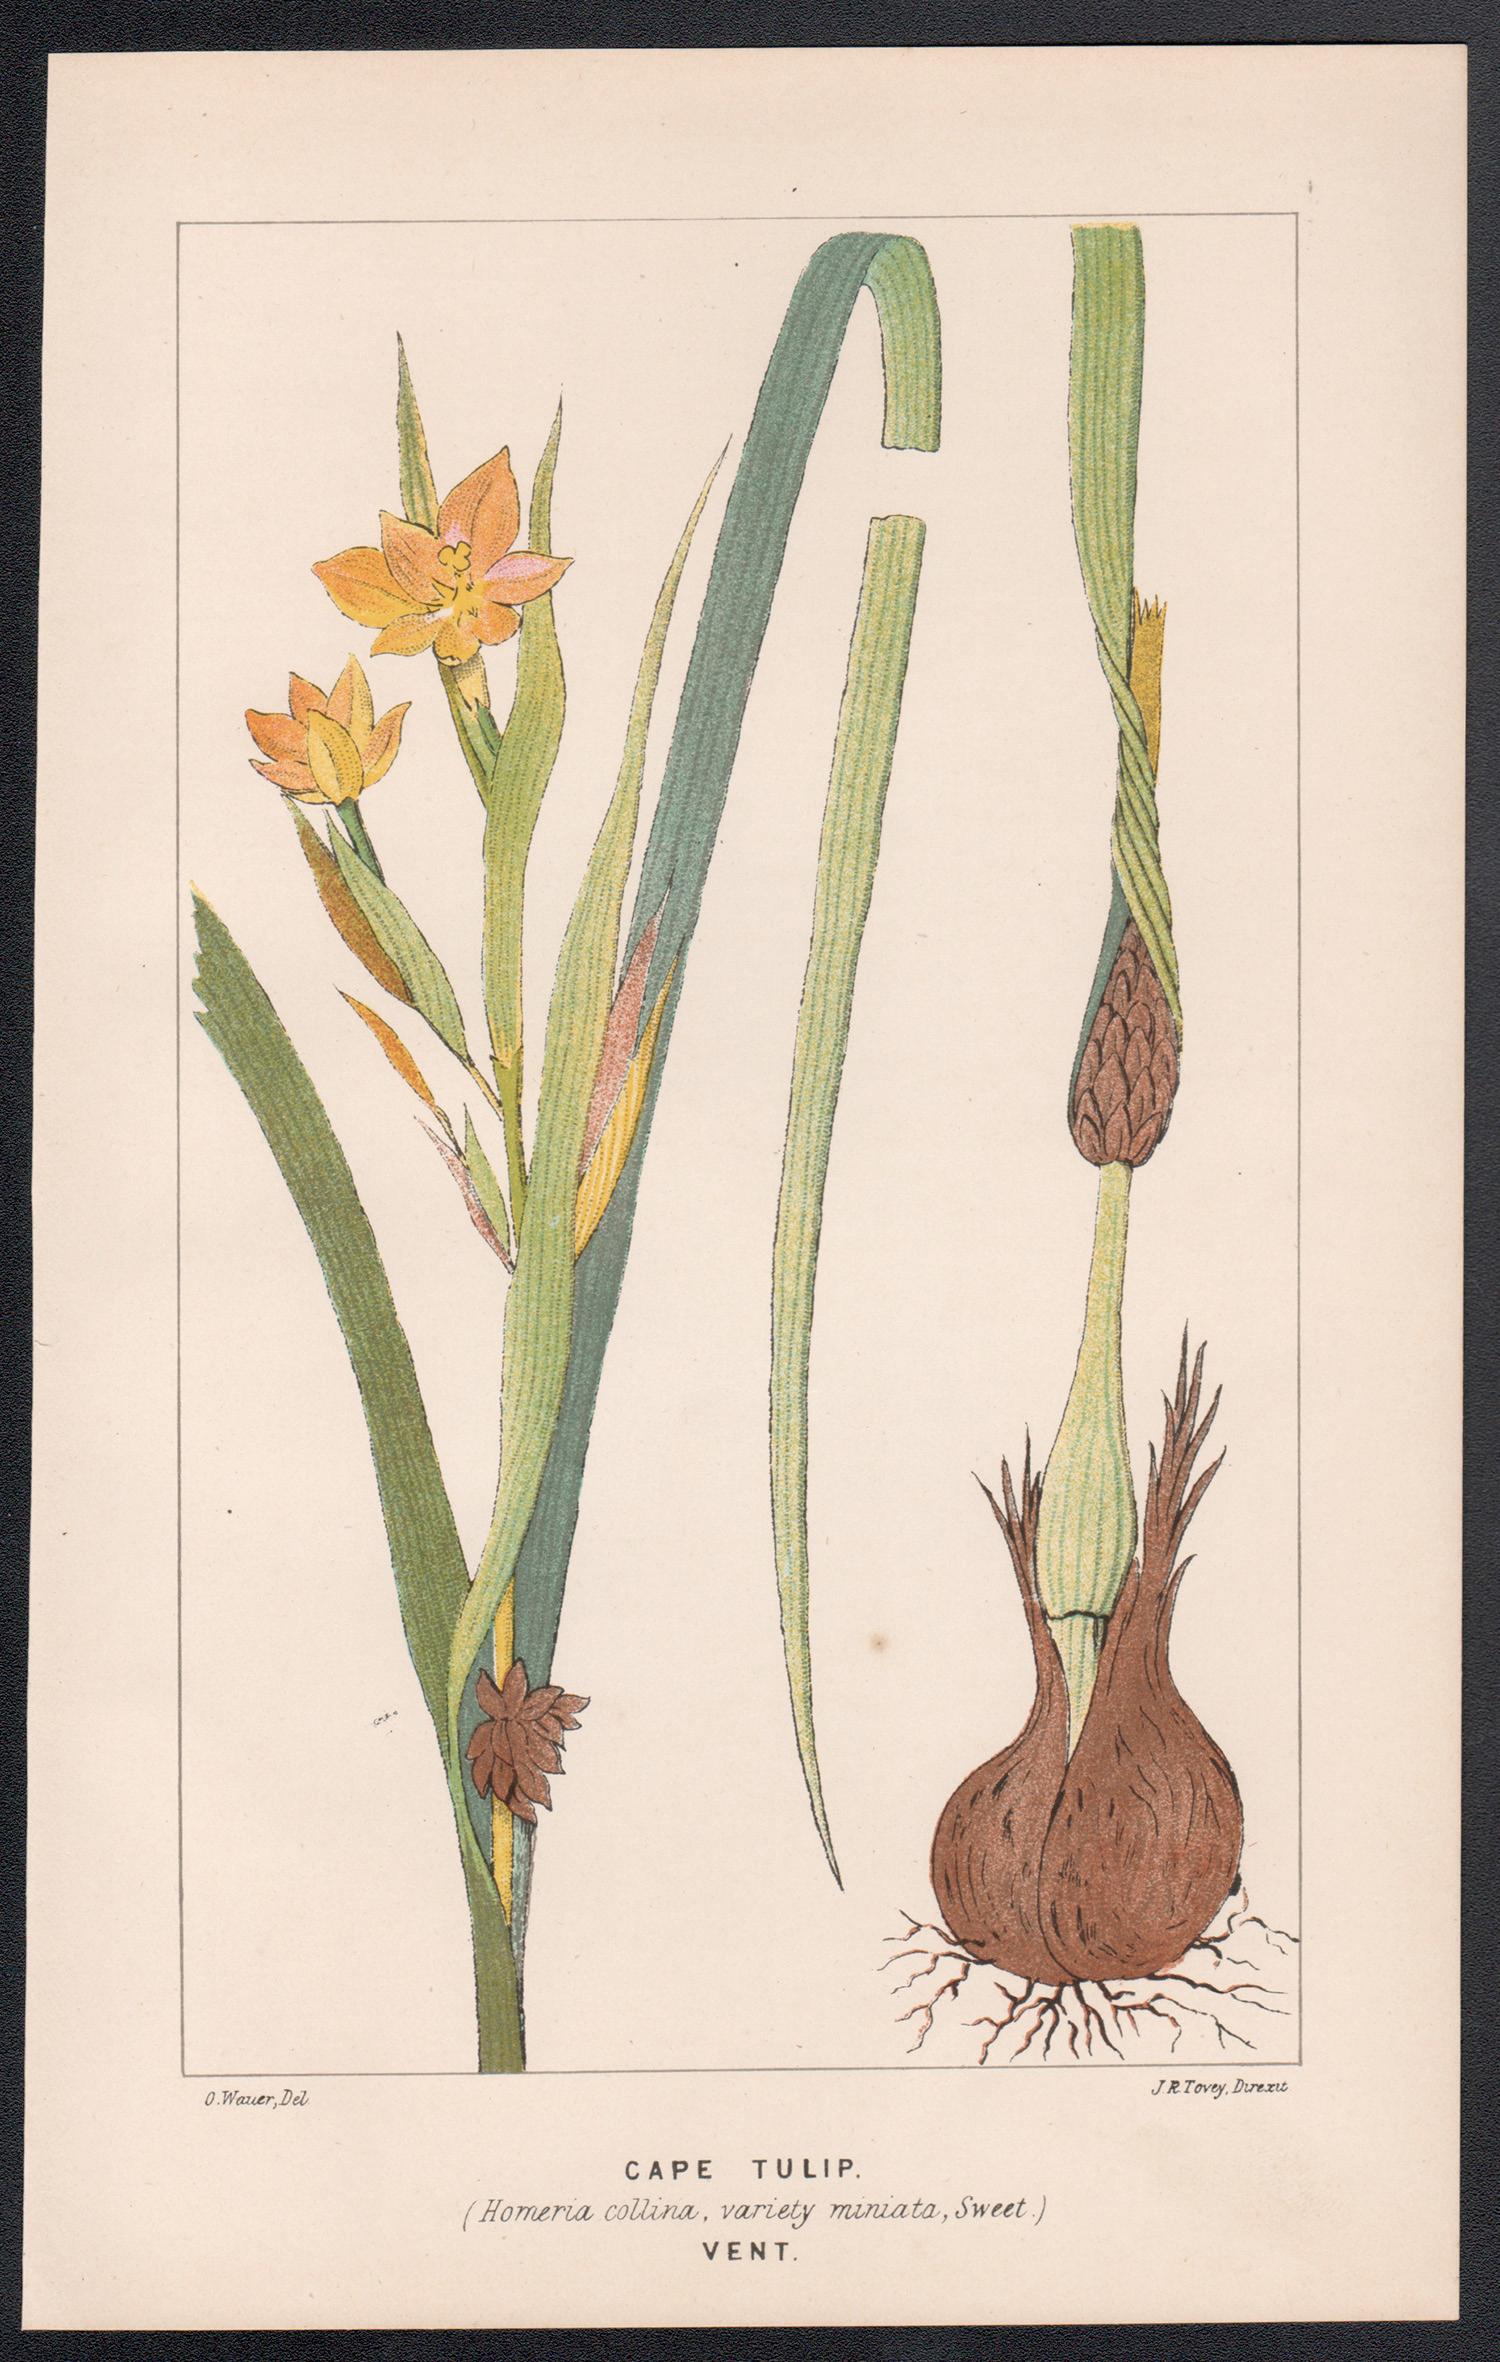 Cape Tulip (Homeria collina), antique botanical lithograph - Print by O Wauer